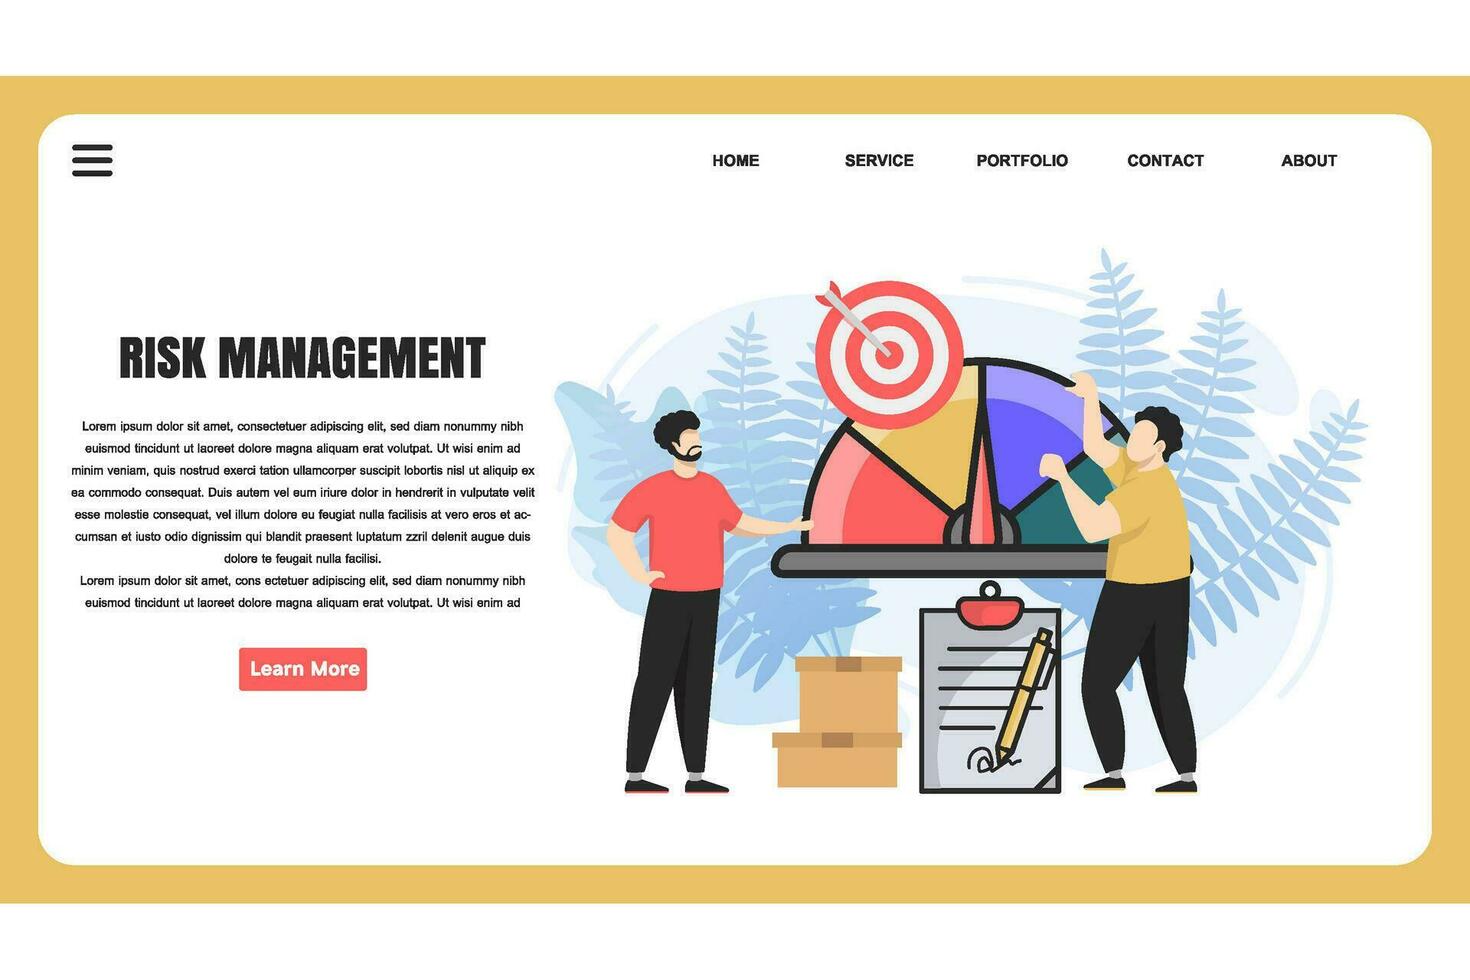 flat design concept Risk Management for website and landing page template. perfect for web page design, banner, mobile app, Vector illustration